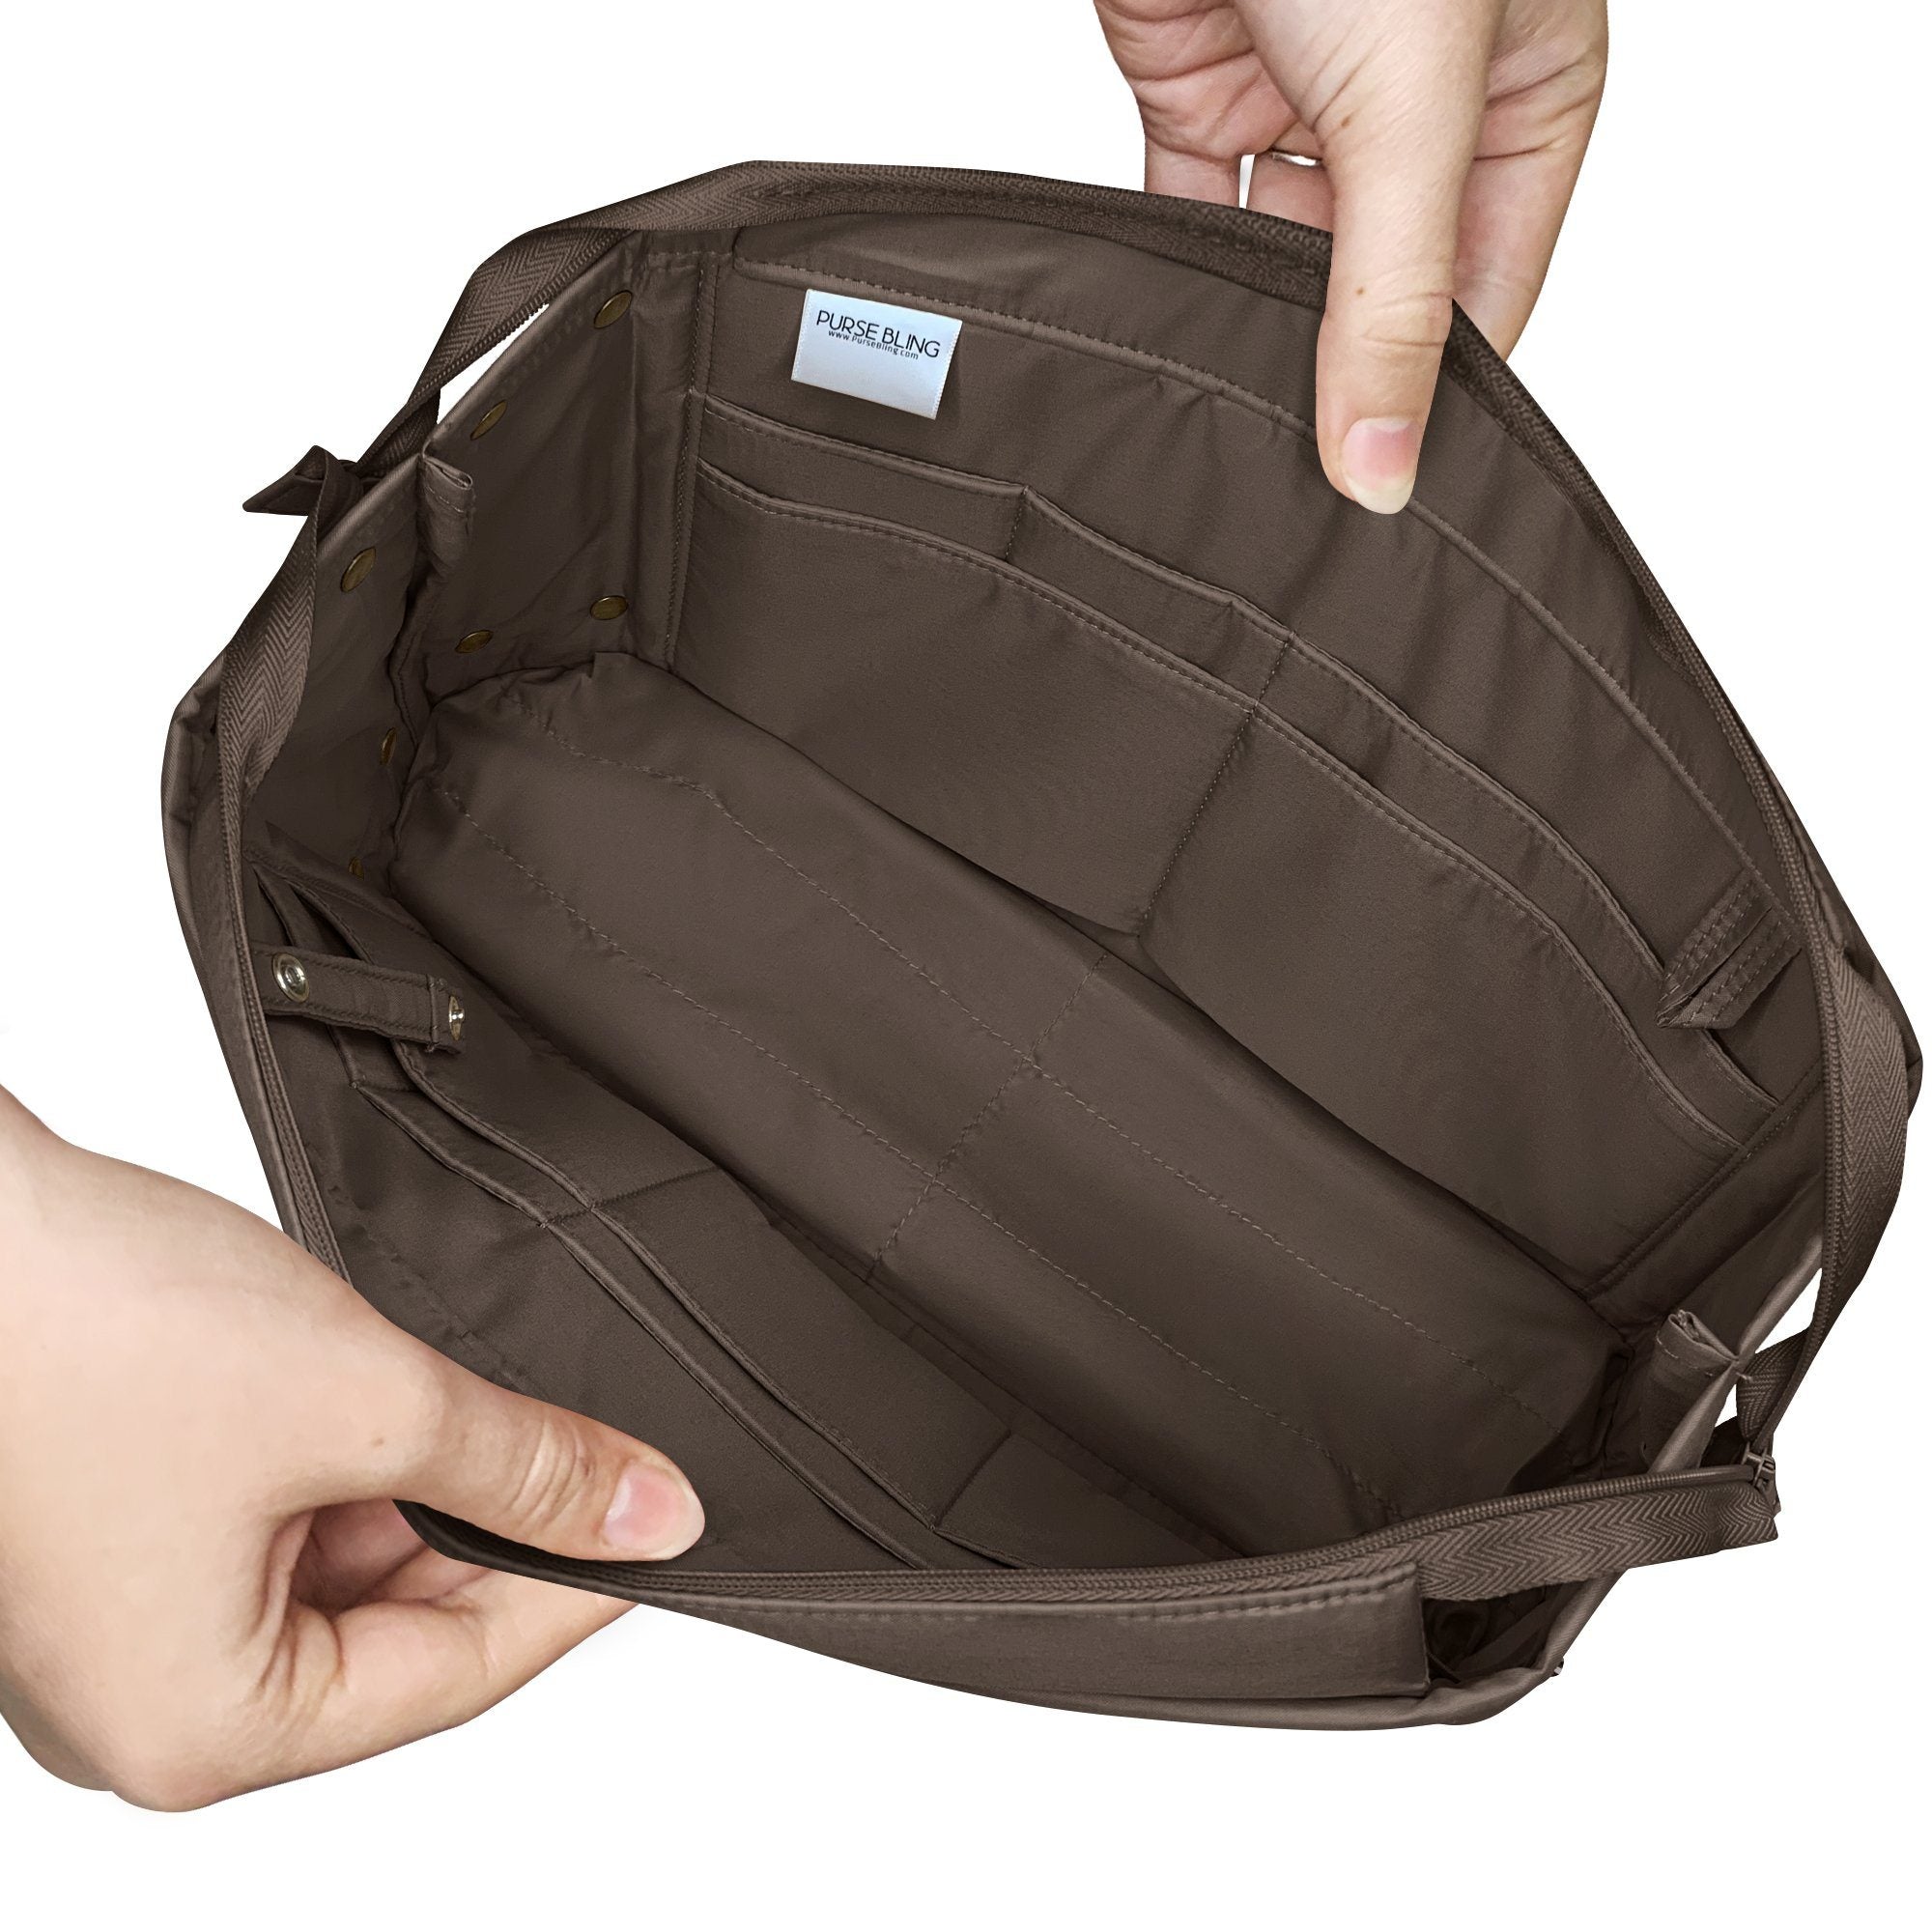 Canvas Bag Organizer Large Capacity Portable Tote Insert Bag Divider Travel  | eBay